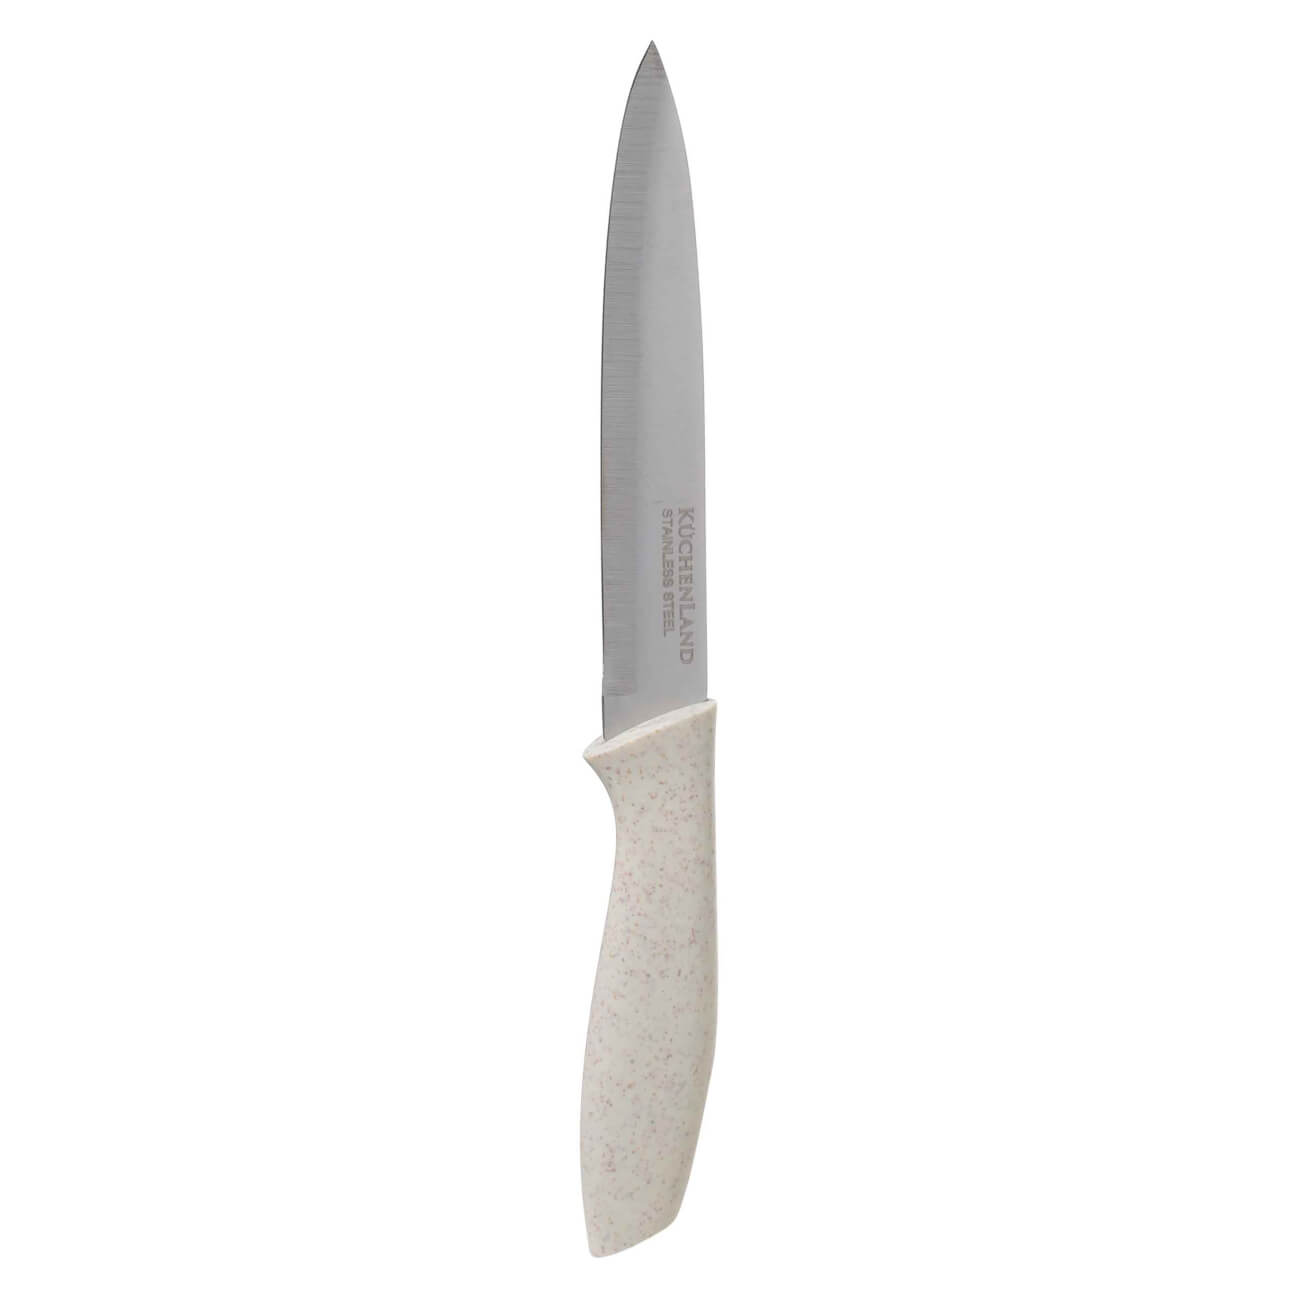 Нож для нарезки, 13 см, сталь/пластик, молочный, Speck-light